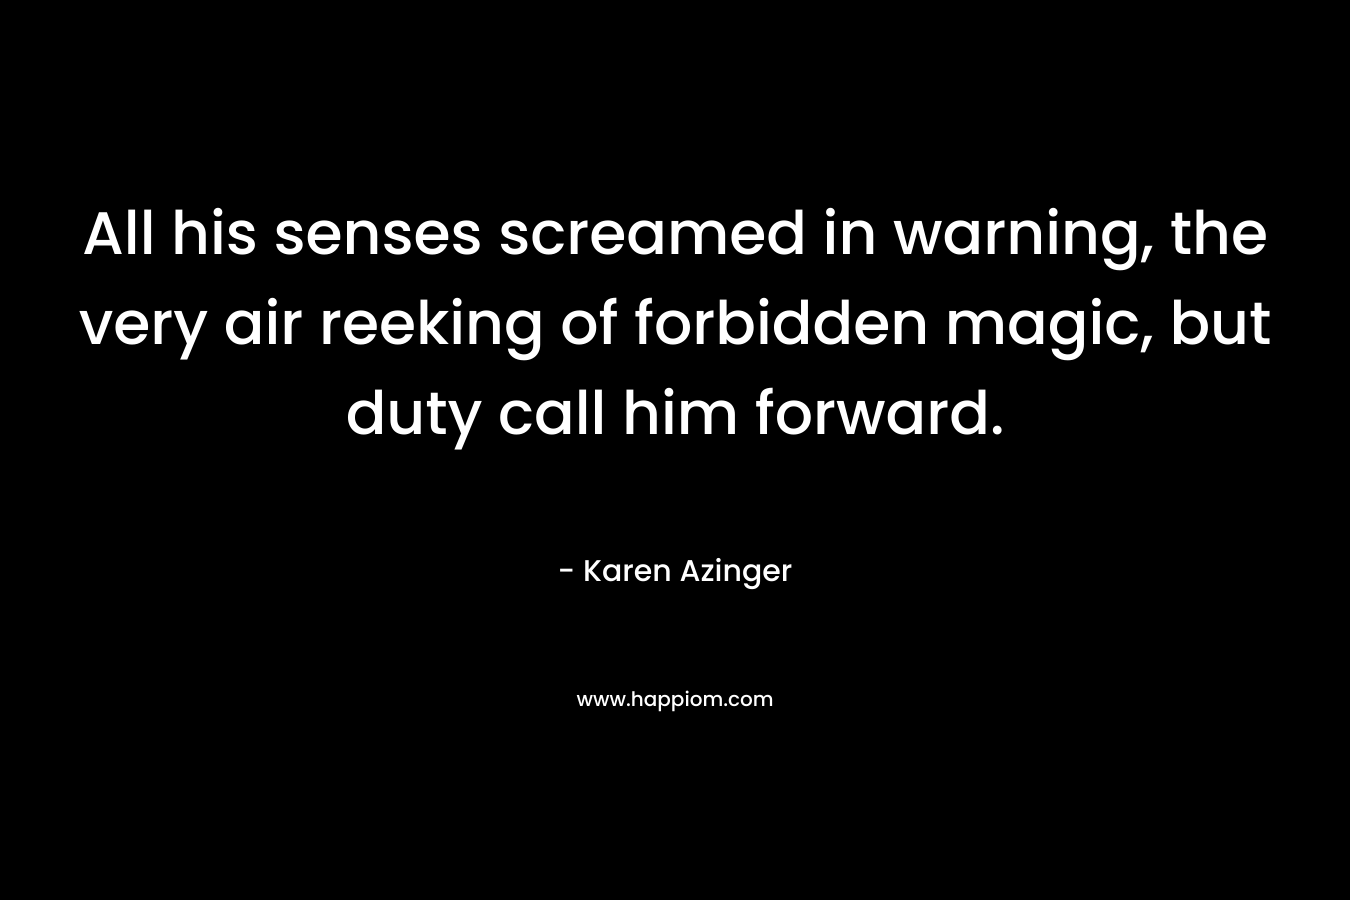 All his senses screamed in warning, the very air reeking of forbidden magic, but duty call him forward. – Karen Azinger